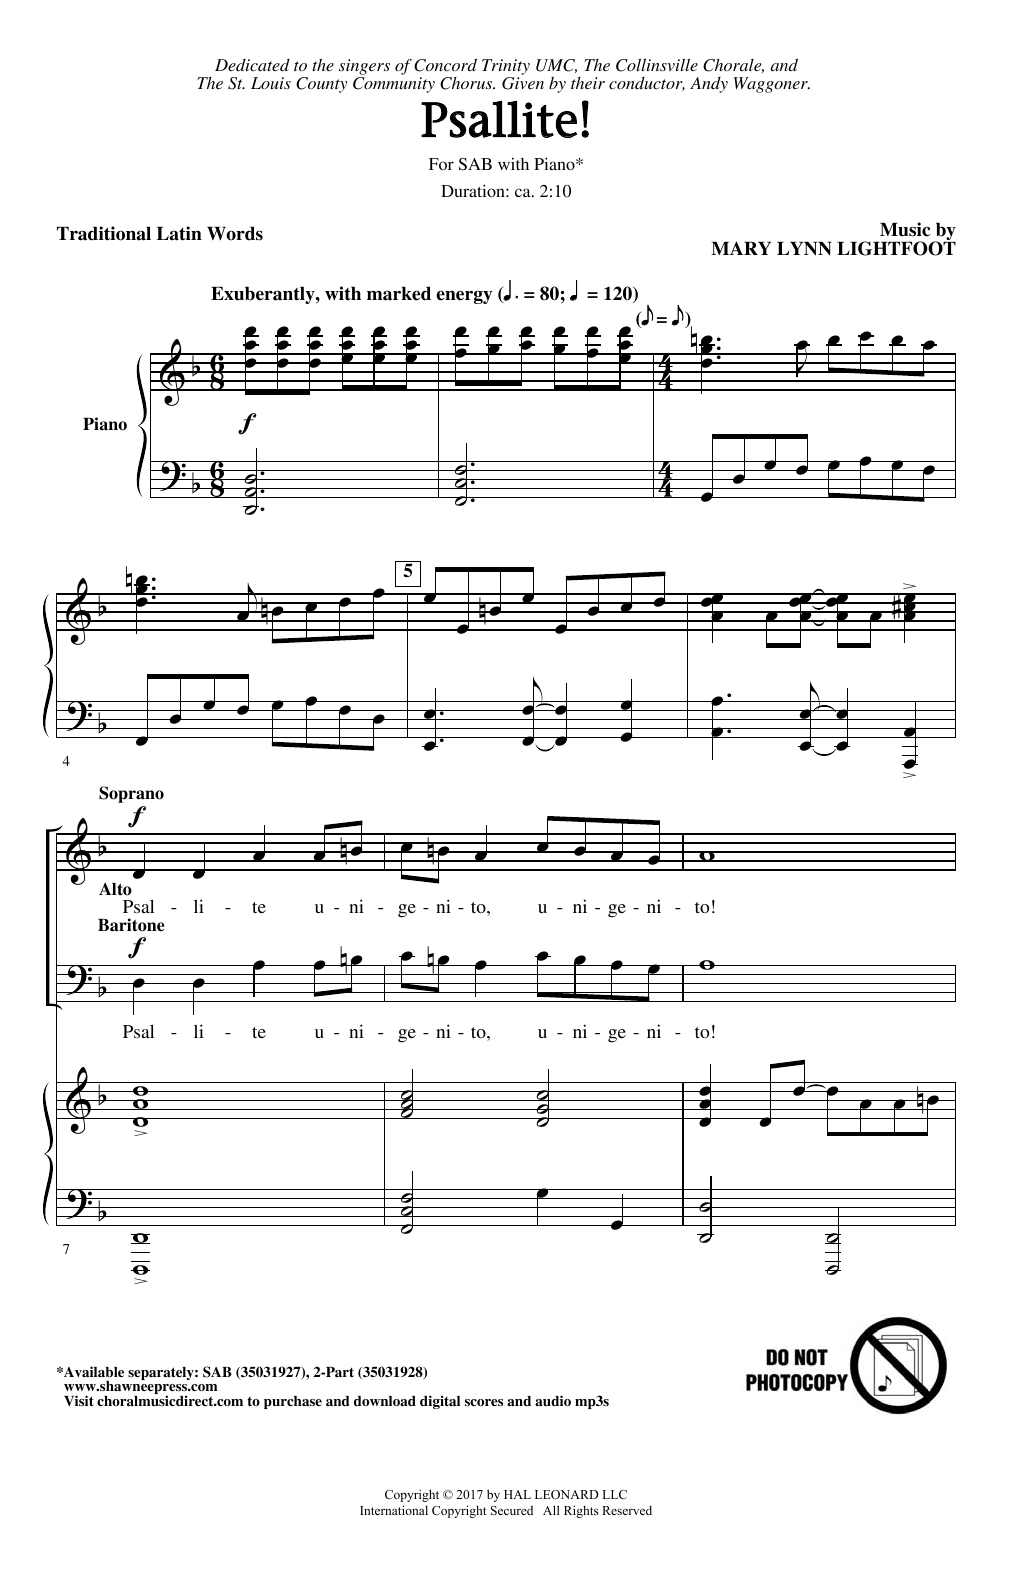 Mary Lynn Lightfoot Psallite! sheet music notes and chords arranged for SAB Choir